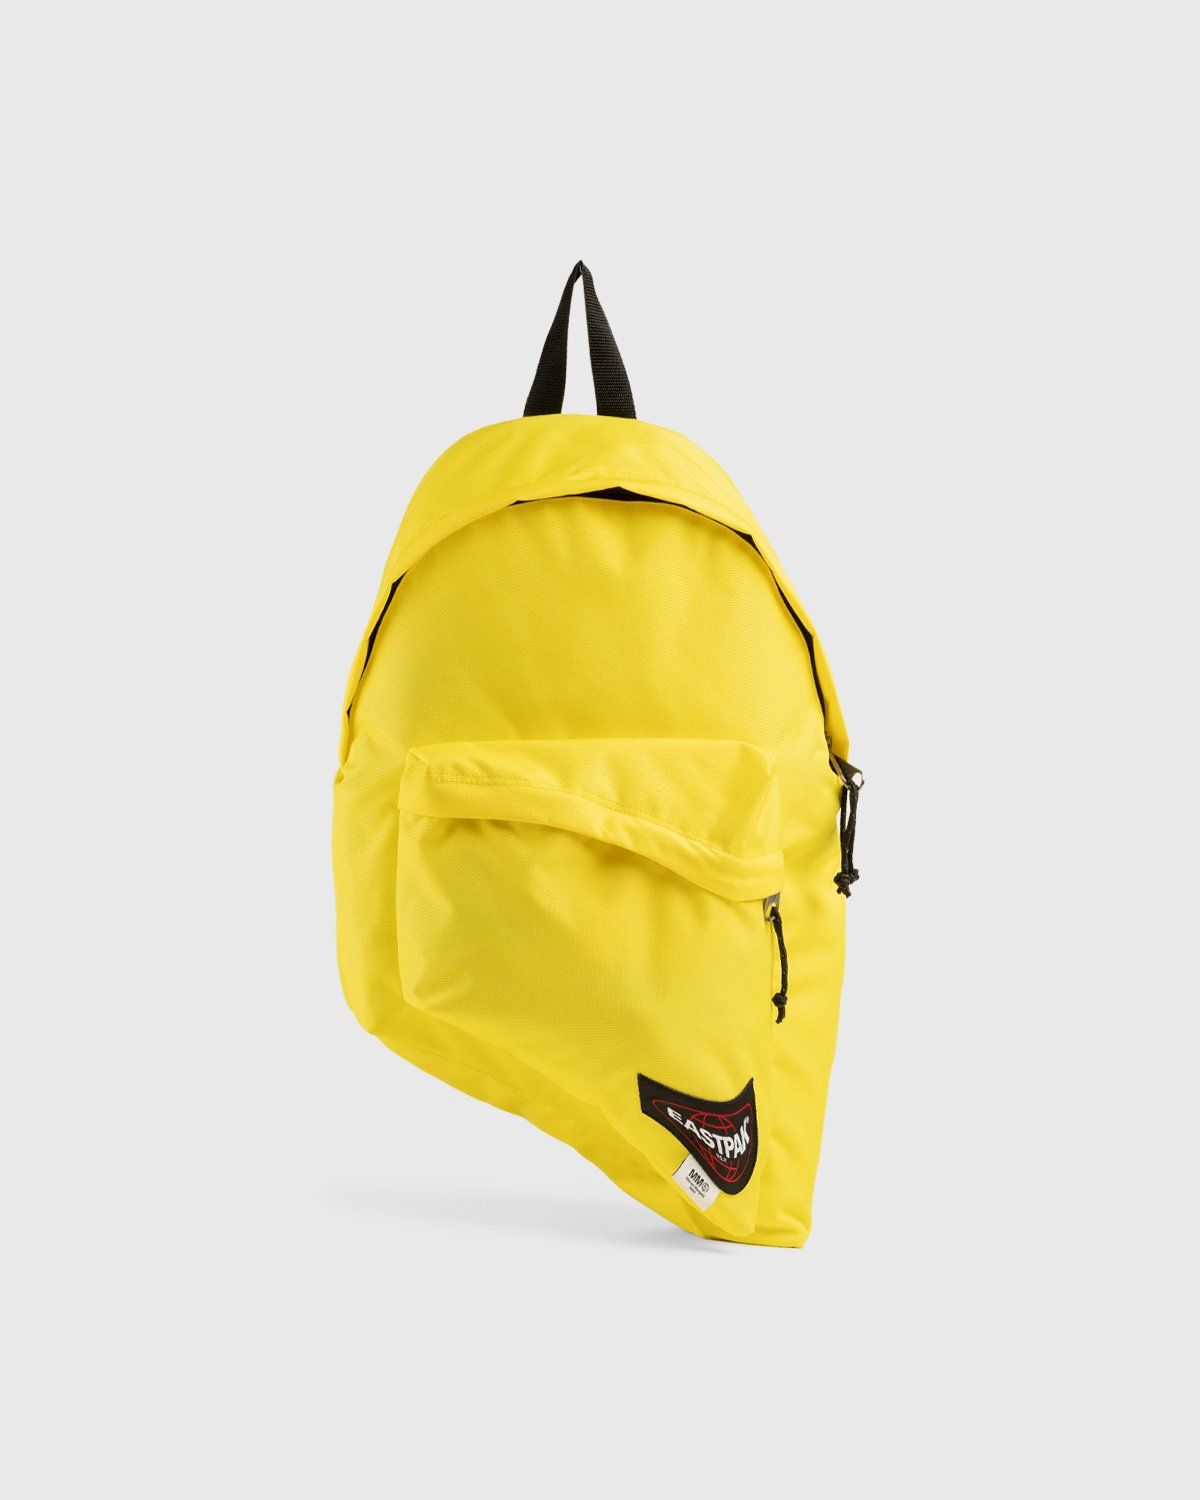 MM6 Maison Margiela x Eastpak – Zaino Backpack Yellow - Bags - Yellow - Image 1